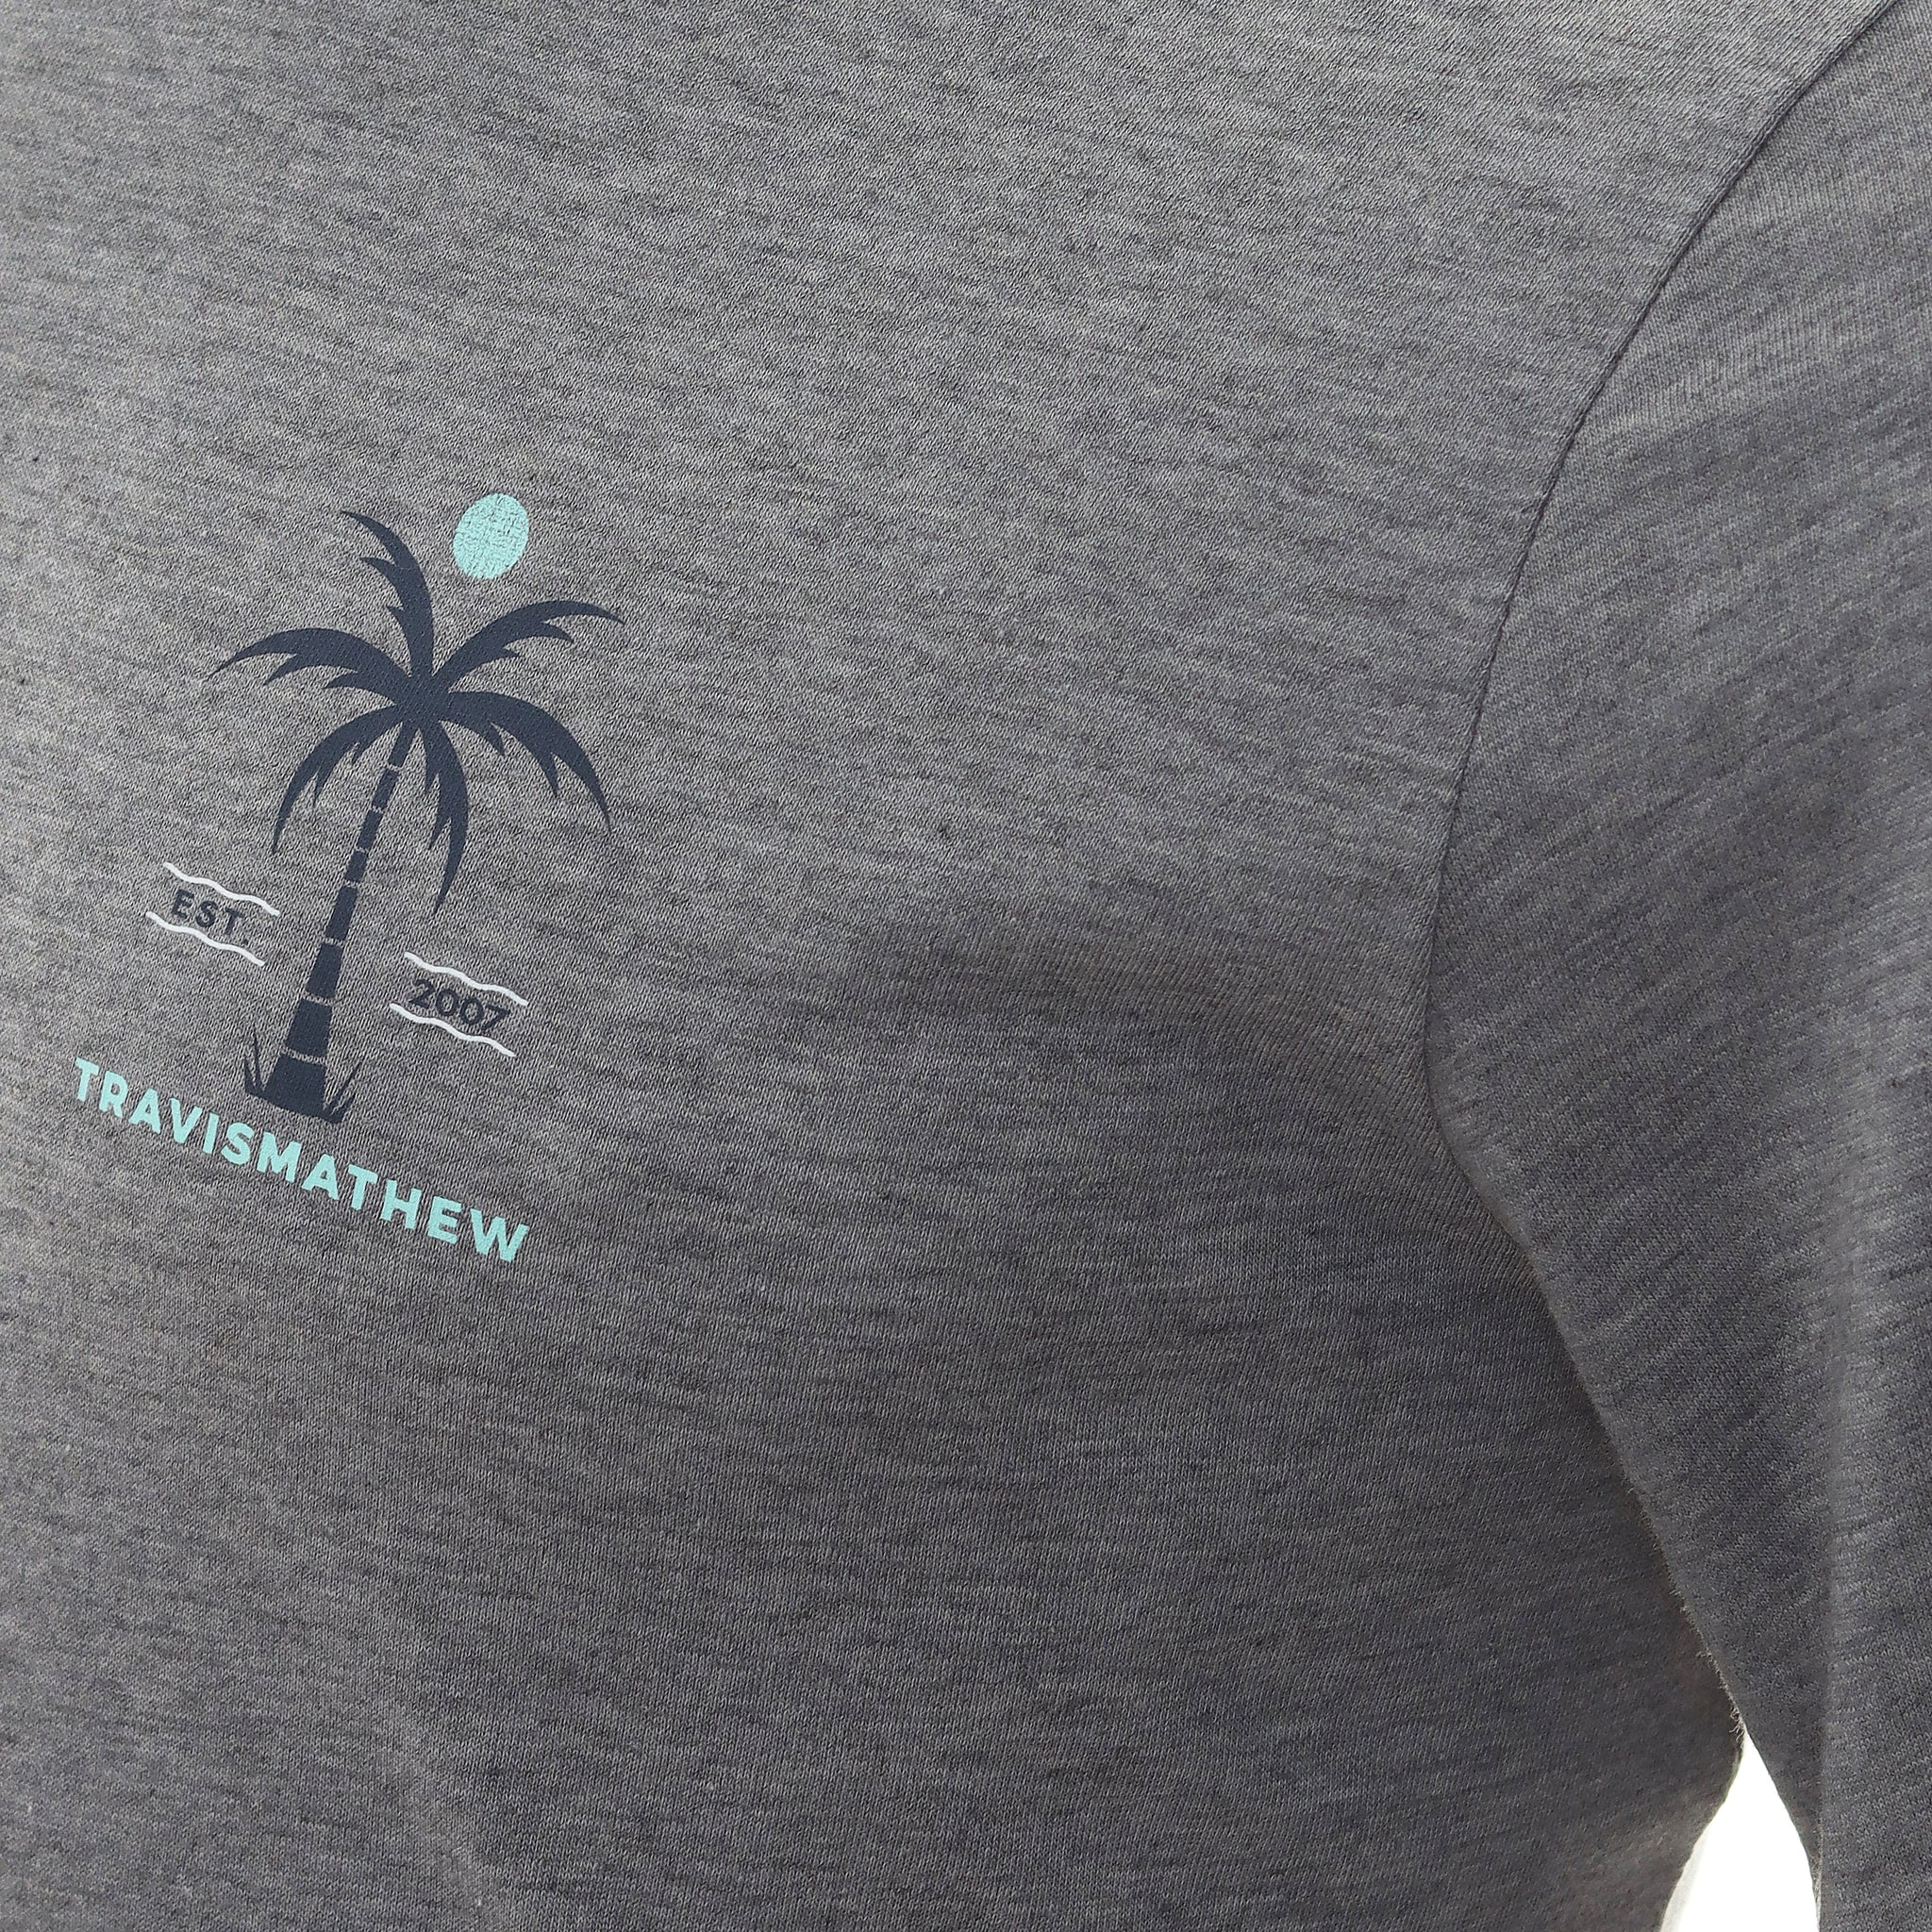 travismathew-private-plane-tee-shirt-1my263-heather-grey